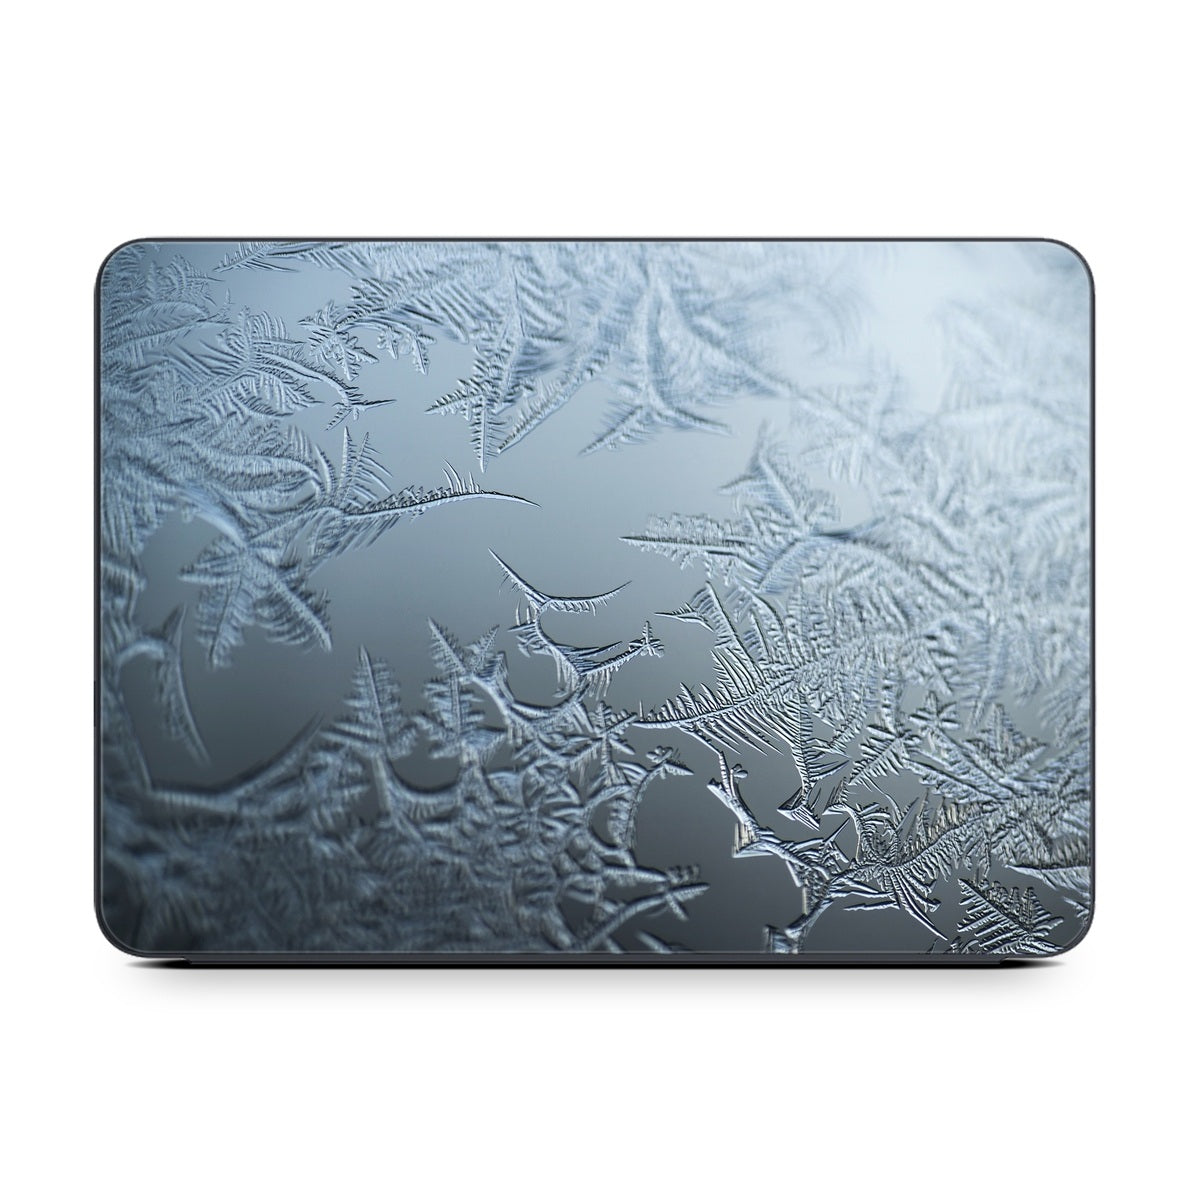 Icy - Apple Smart Keyboard Folio Skin